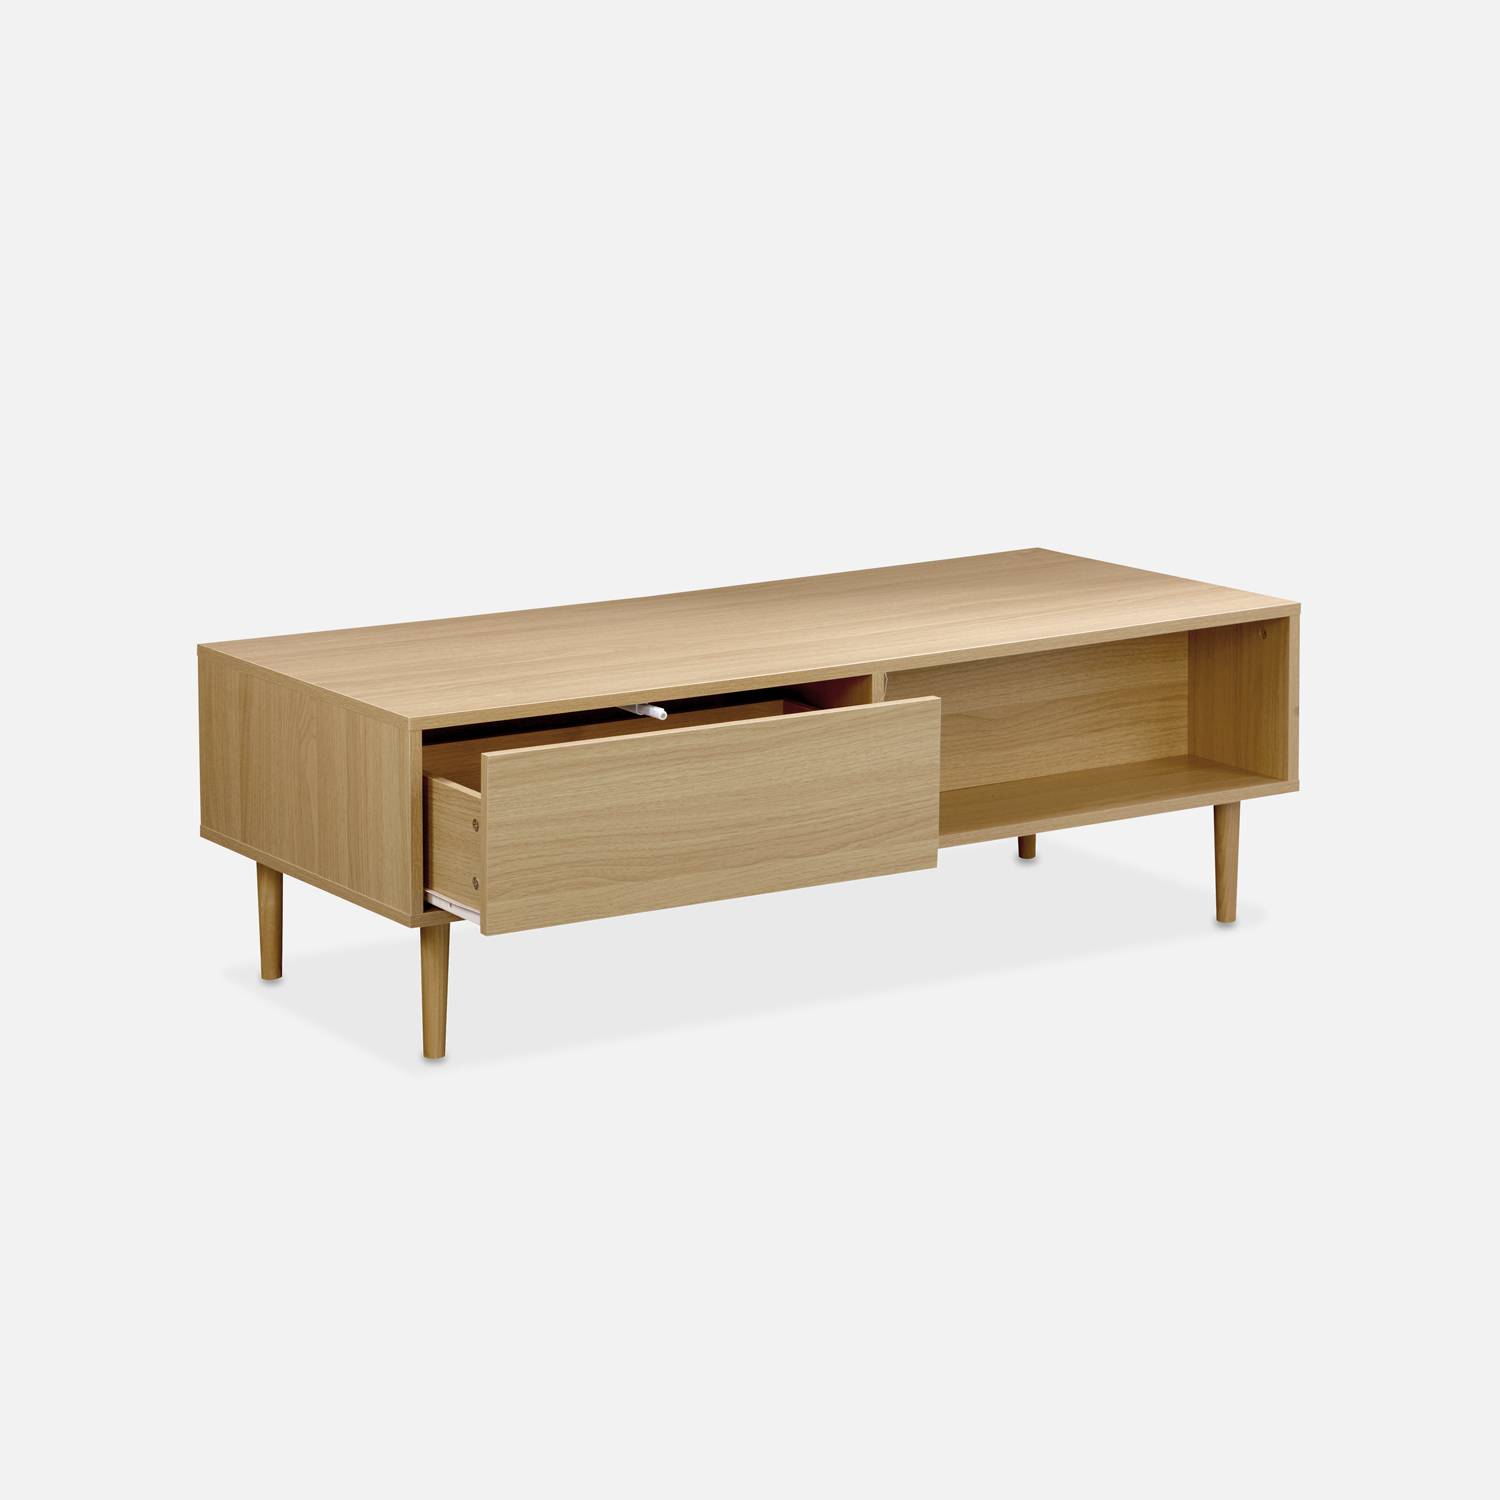 Wood-effect coffee table, 120x55x40cm, Mika, Natural wood colour,sweeek,Photo4